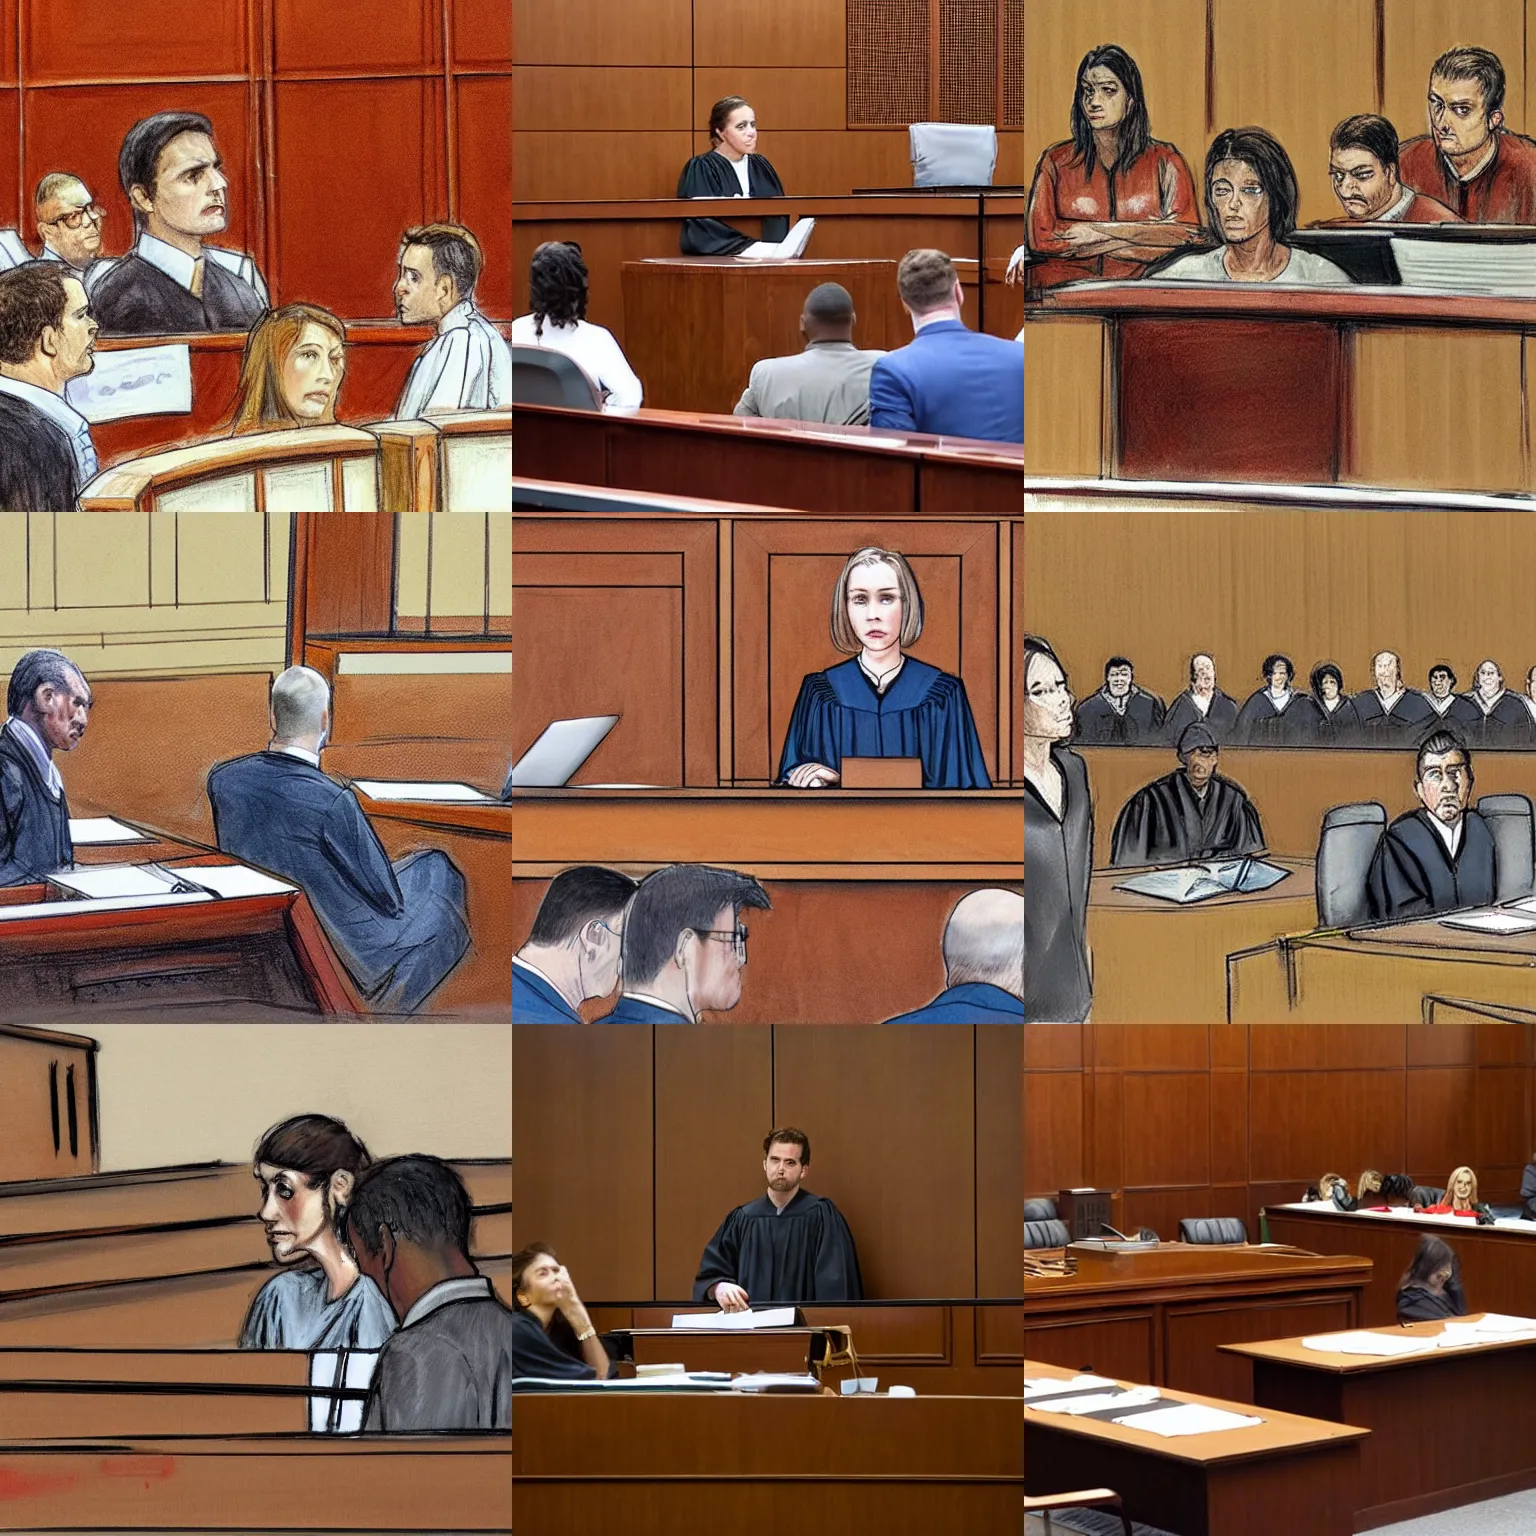 cartoon courtroom scene